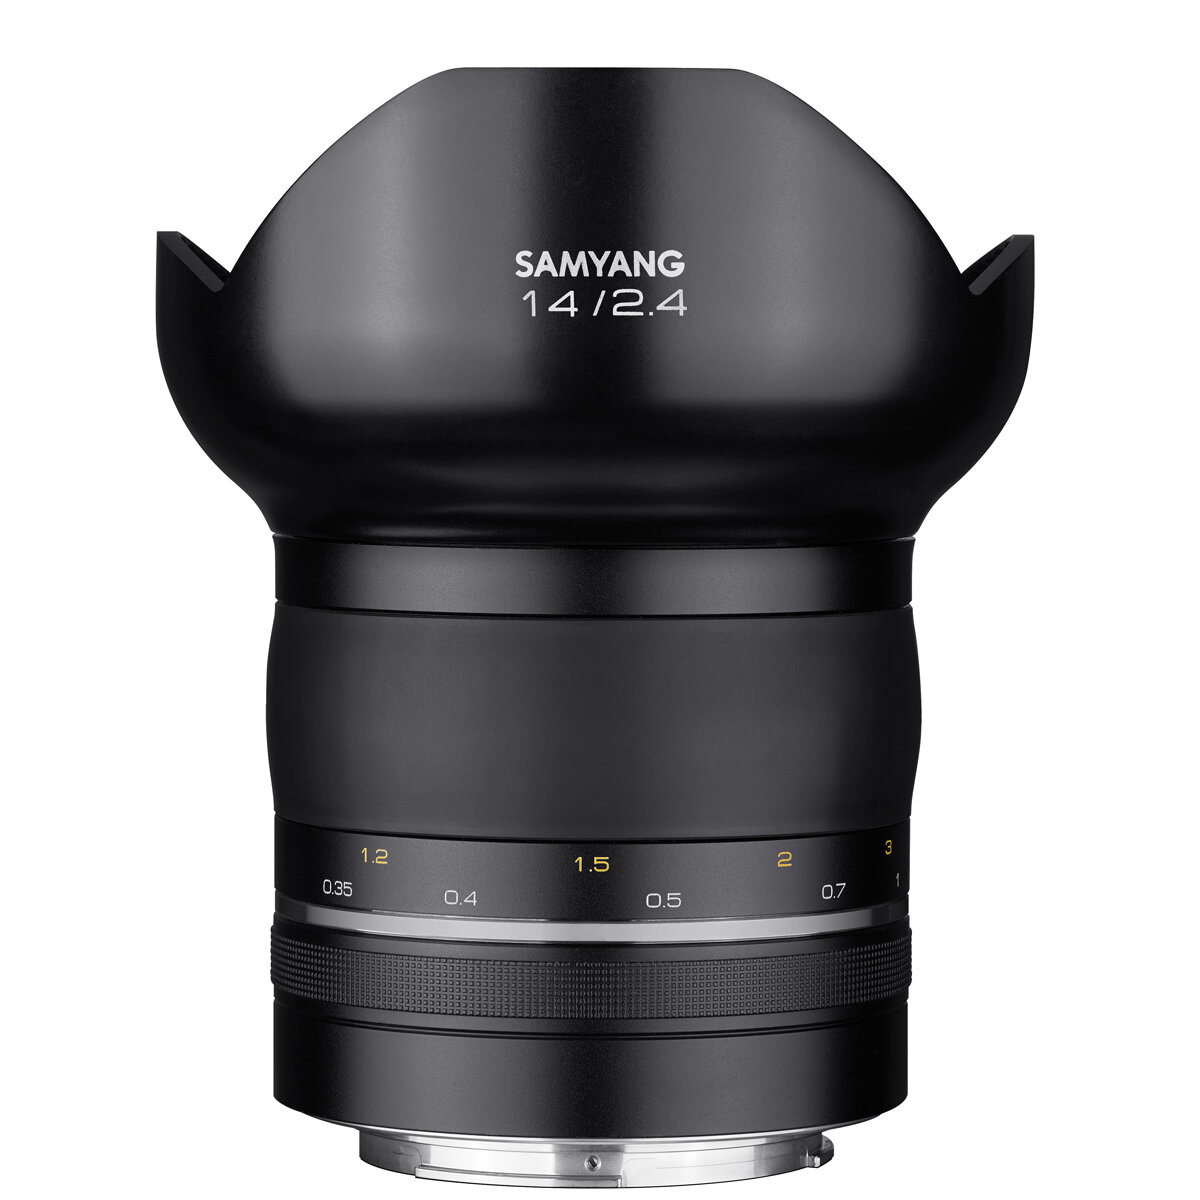 Samyang 14mm f/2.4 Premium XP AE Nikon